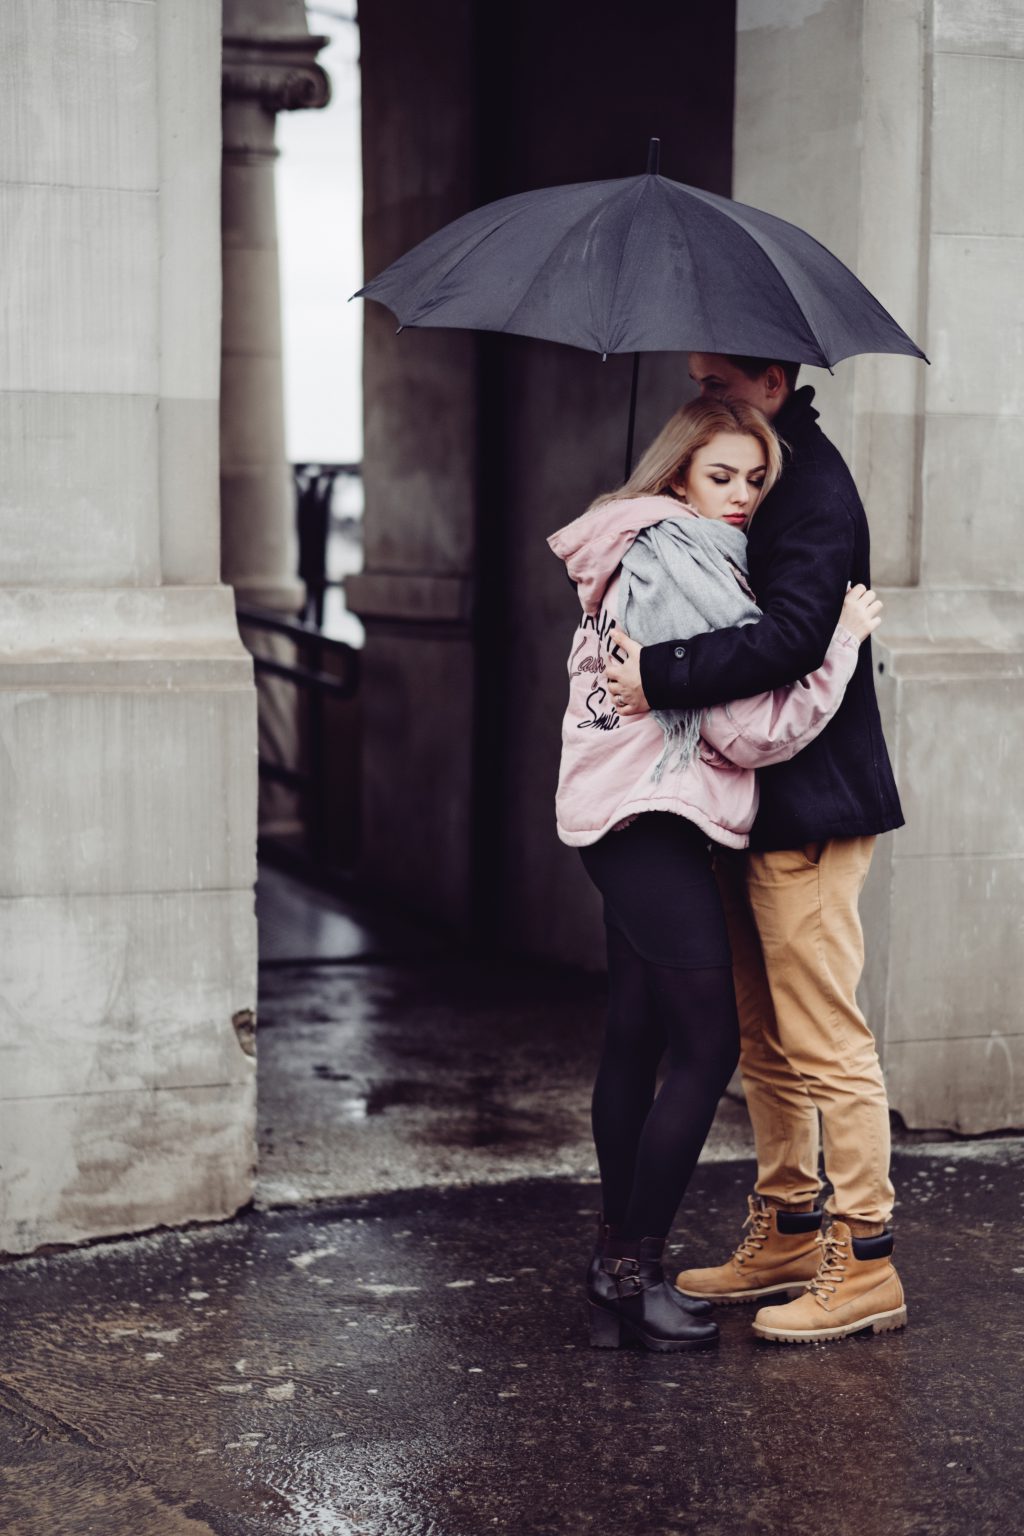 Couple hugging under an umbrella - free stock photo